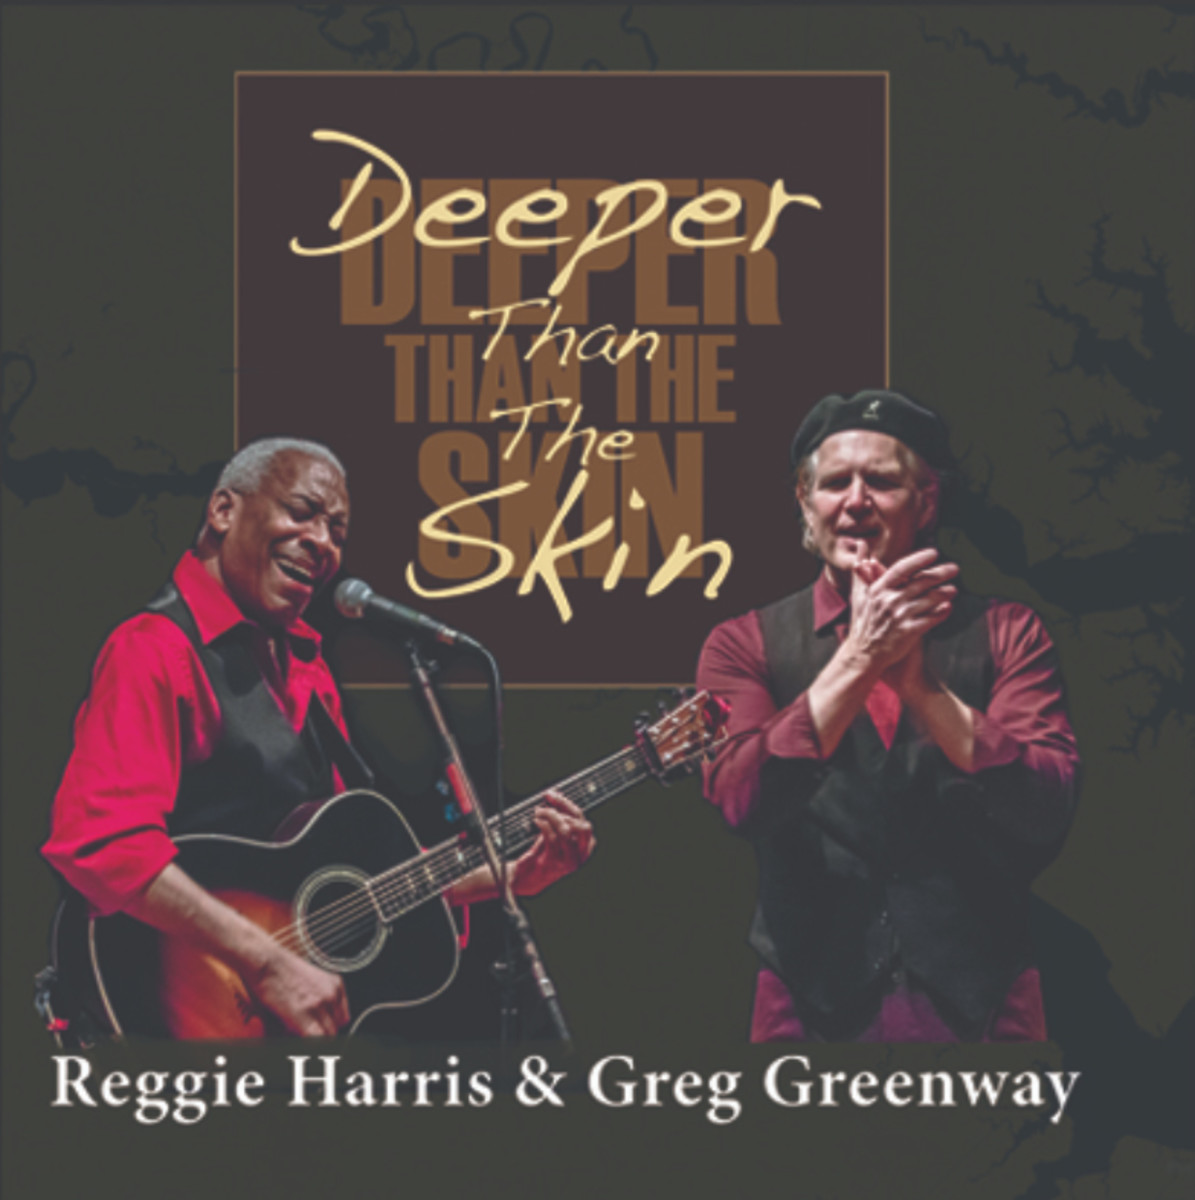 Reggie Harris and Greg Greenway